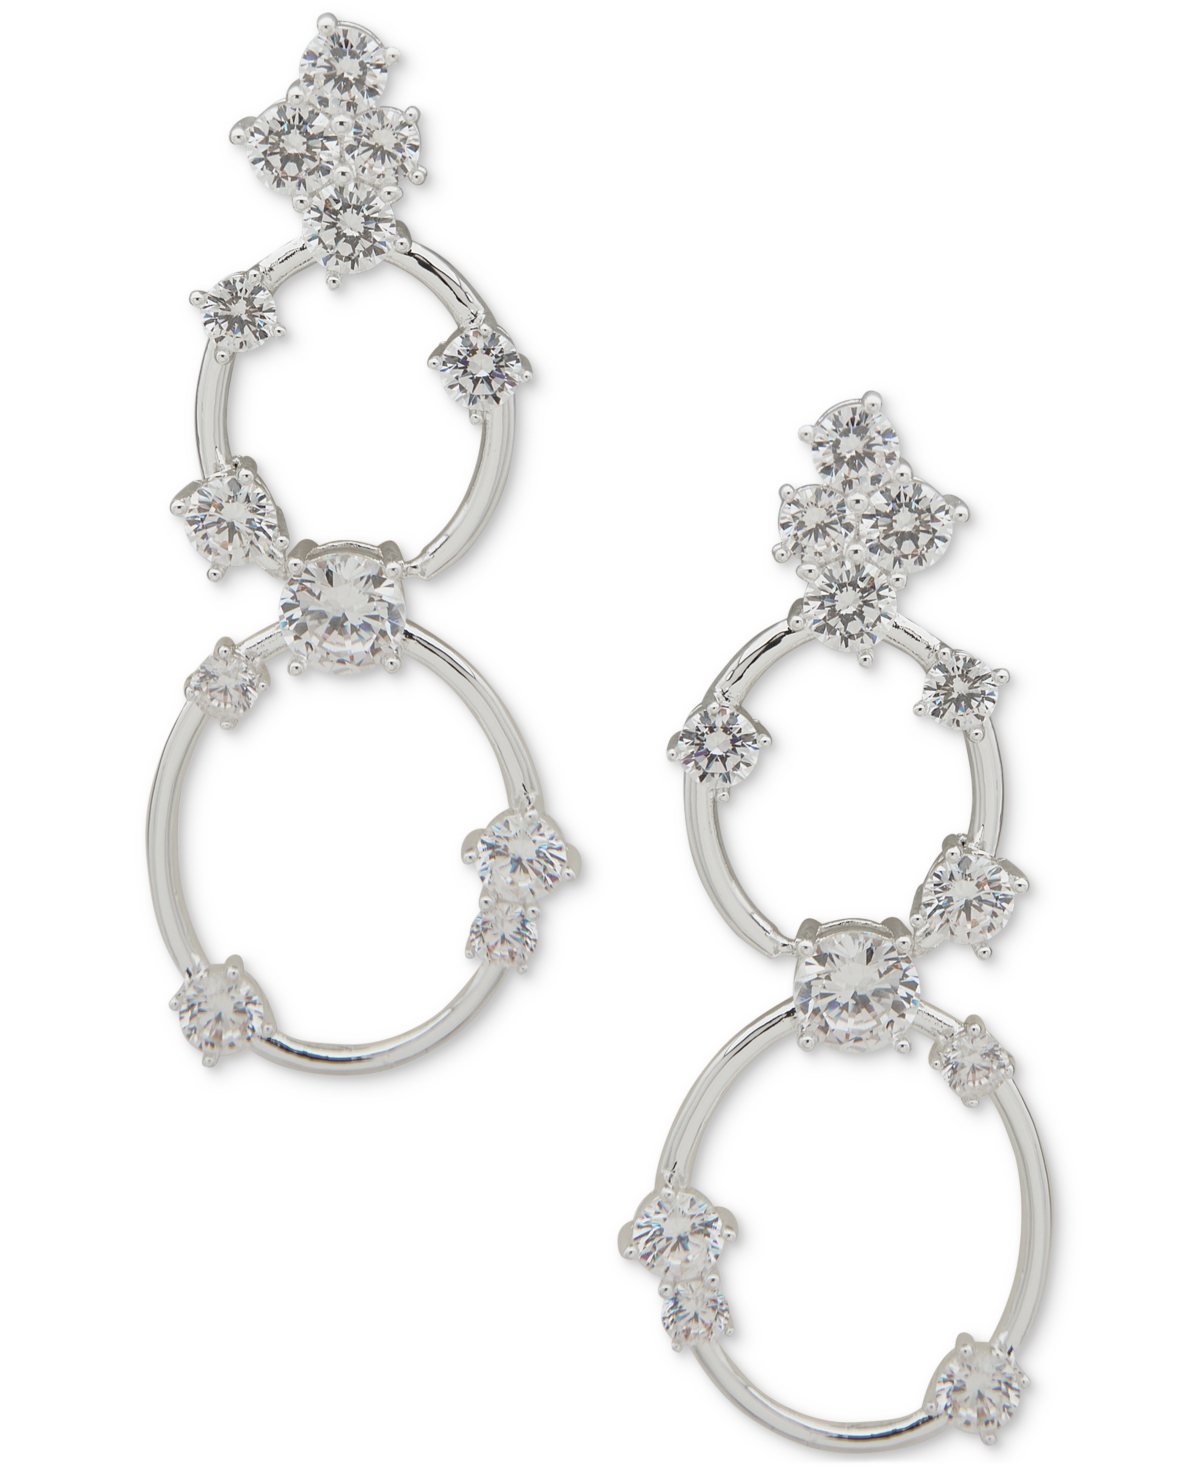 Silver-Tone Cubic Zirconia Ring Double Drop Earrings - Crystal